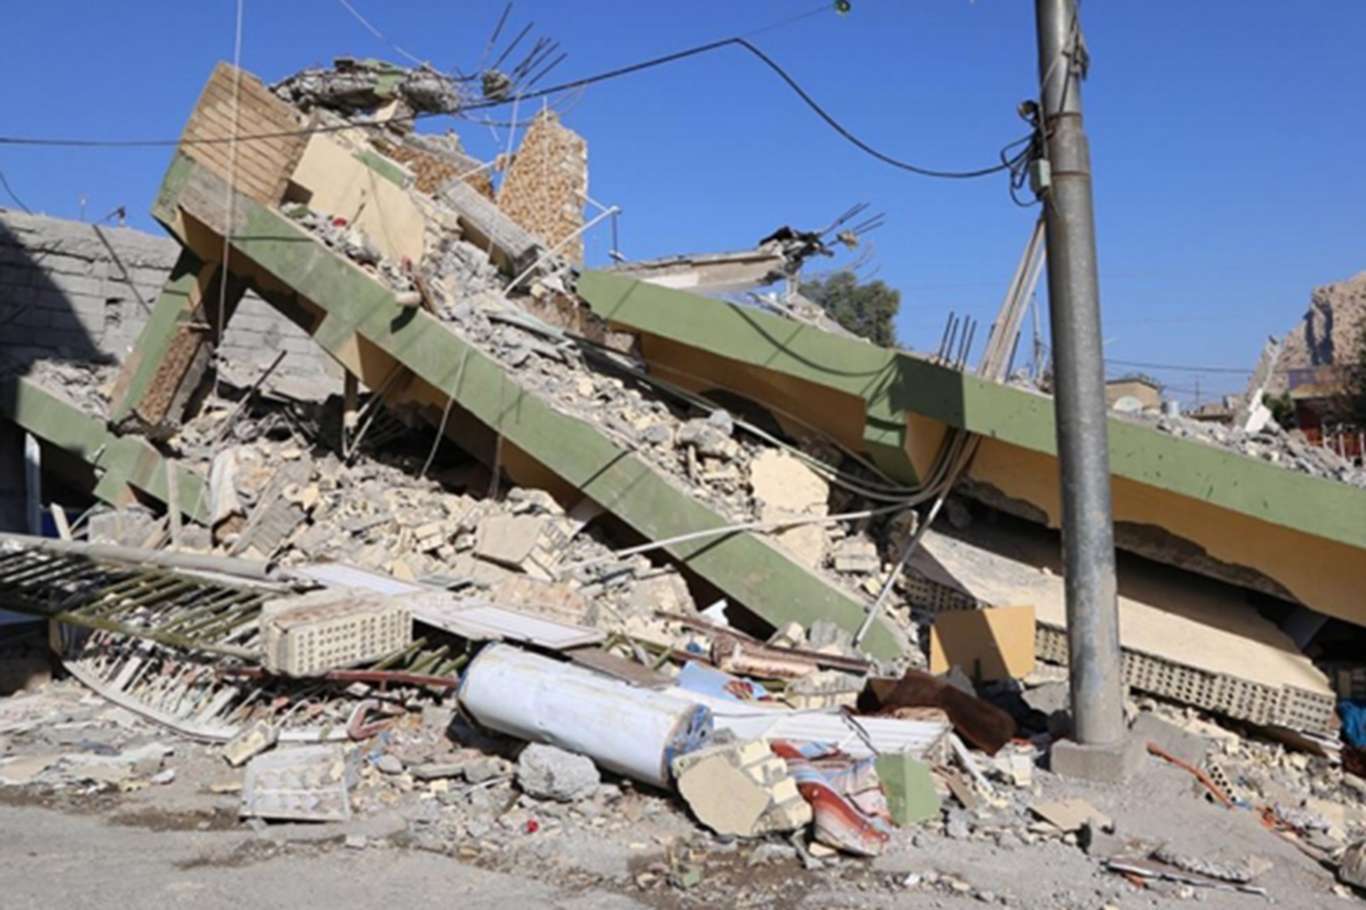 Death toll from Haiti earthquake rises to 304